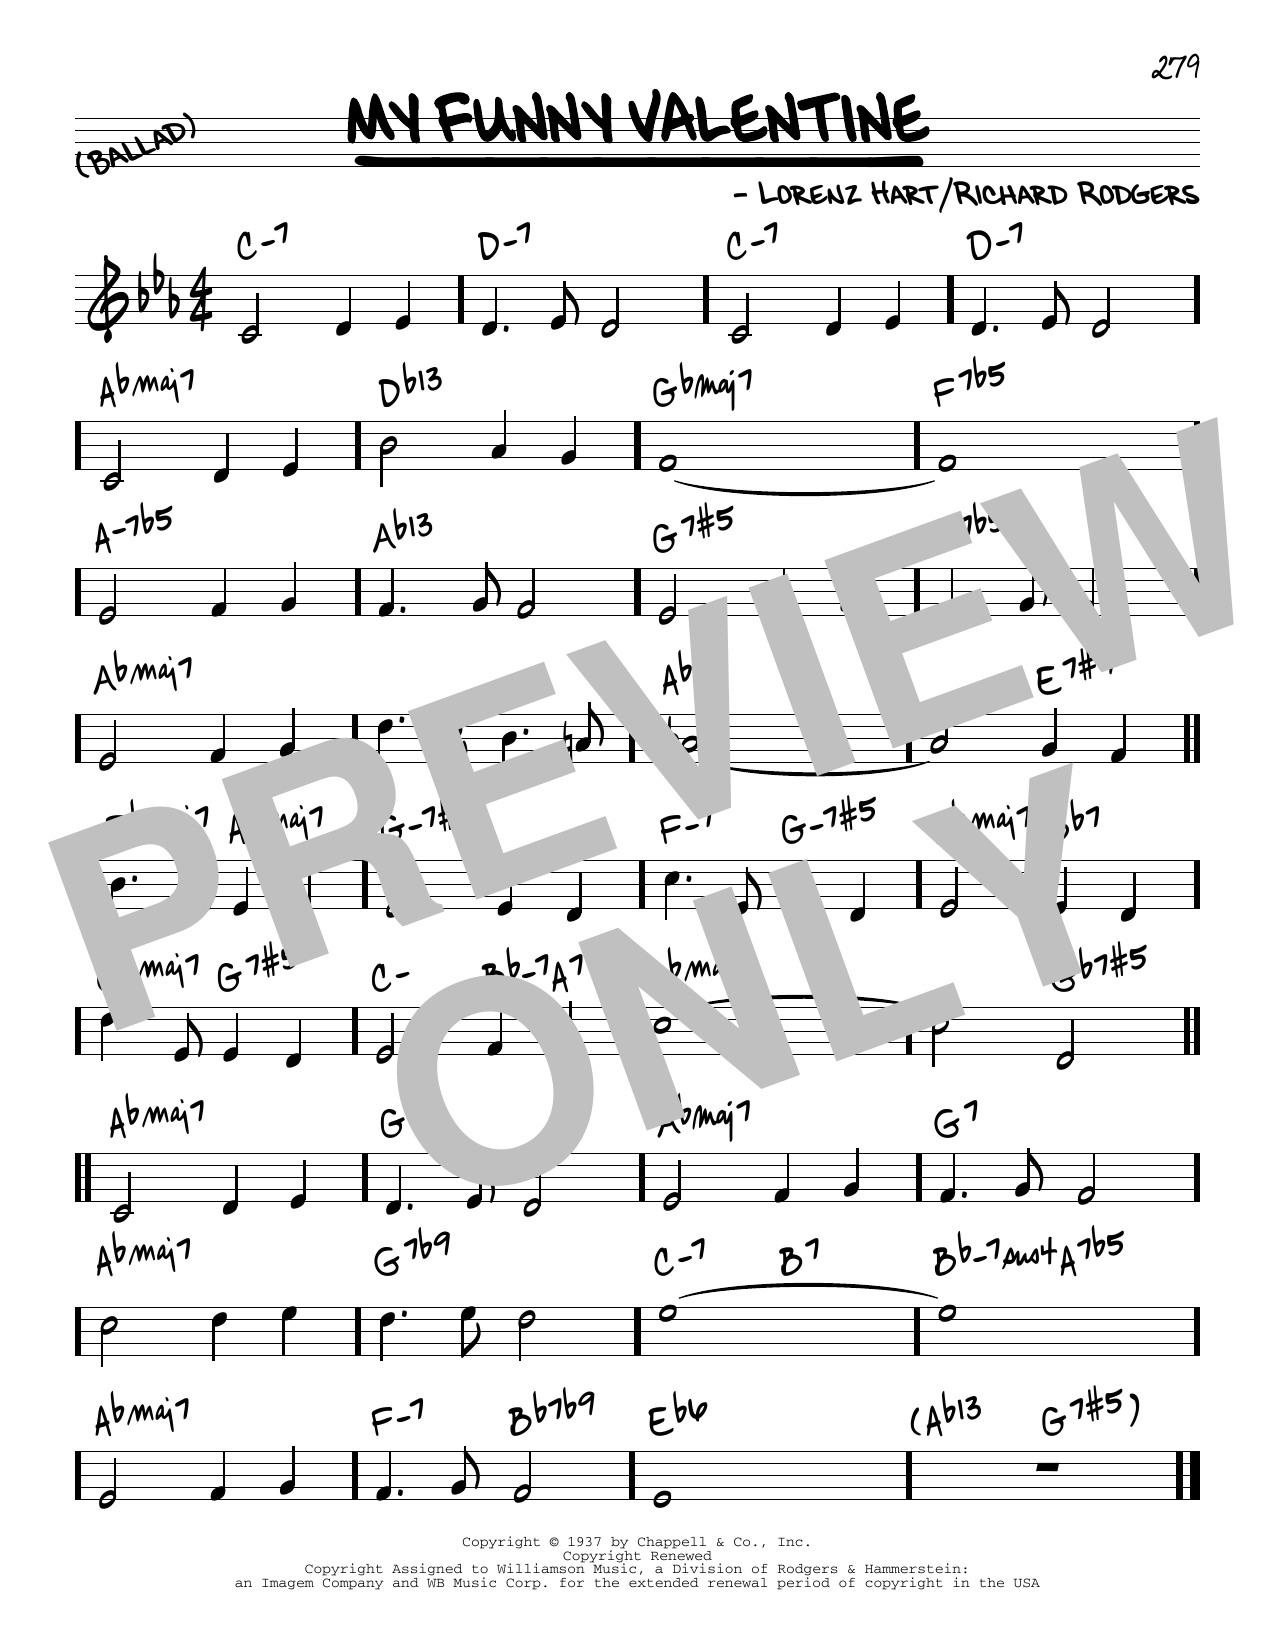 Download Rodgers & Hart My Funny Valentine [Reharmonized versio Sheet Music